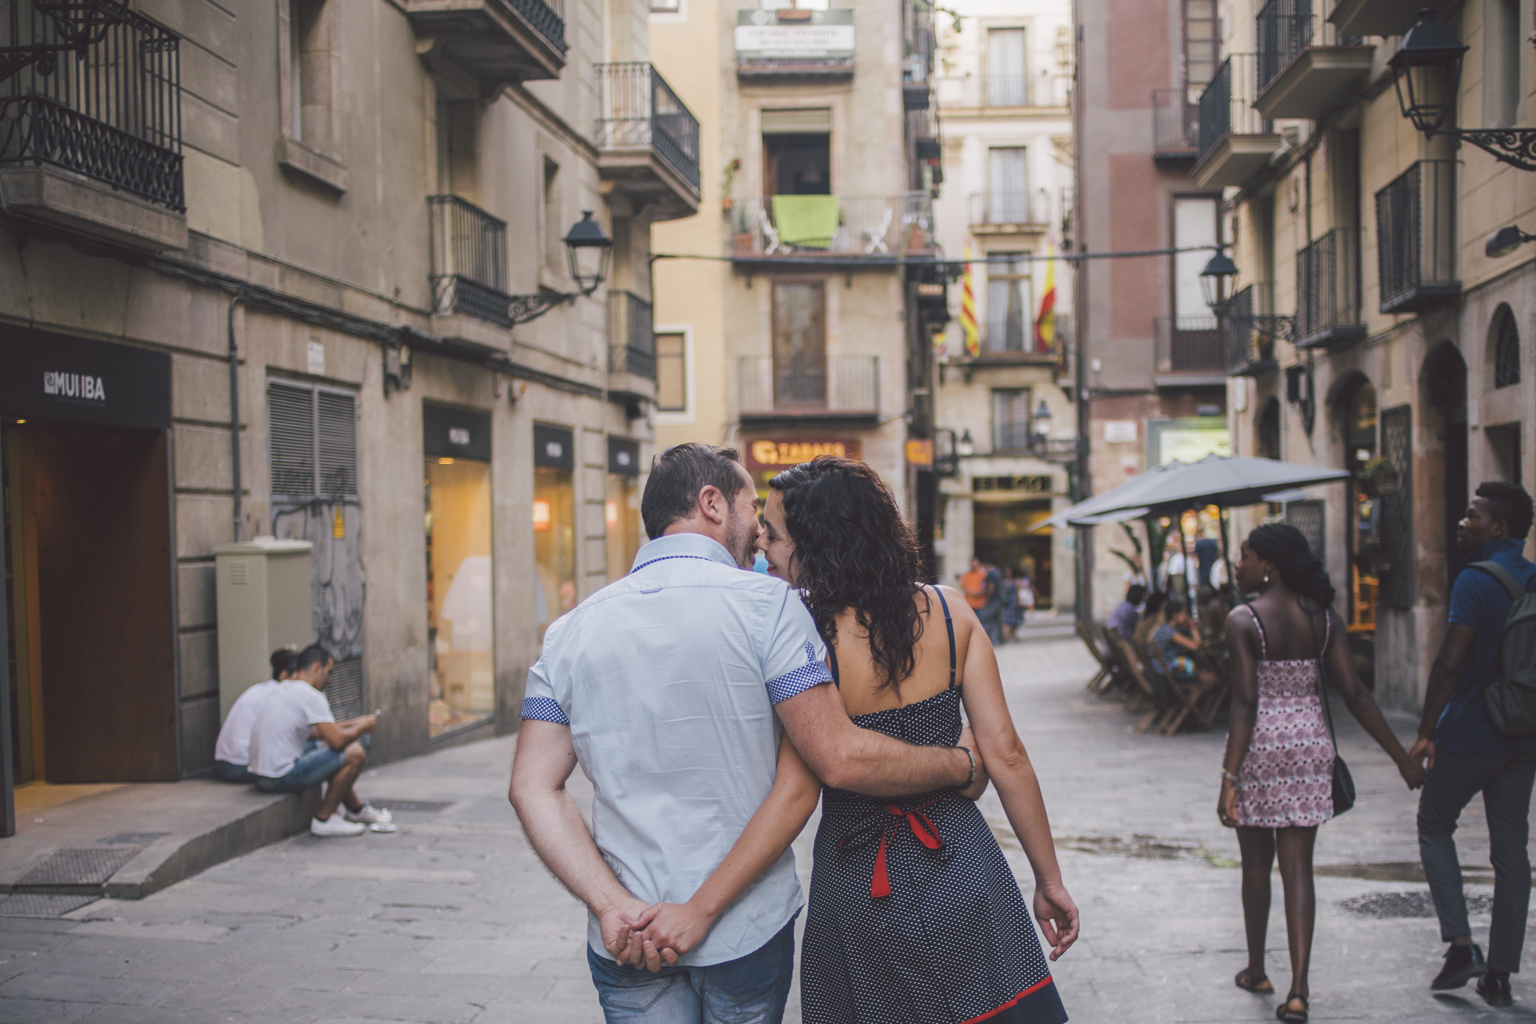 fotógrafo de pareja barcelona :: fotógrafo preboda barcelona :: fotografía romántica :: reportaje de pareja barcelona